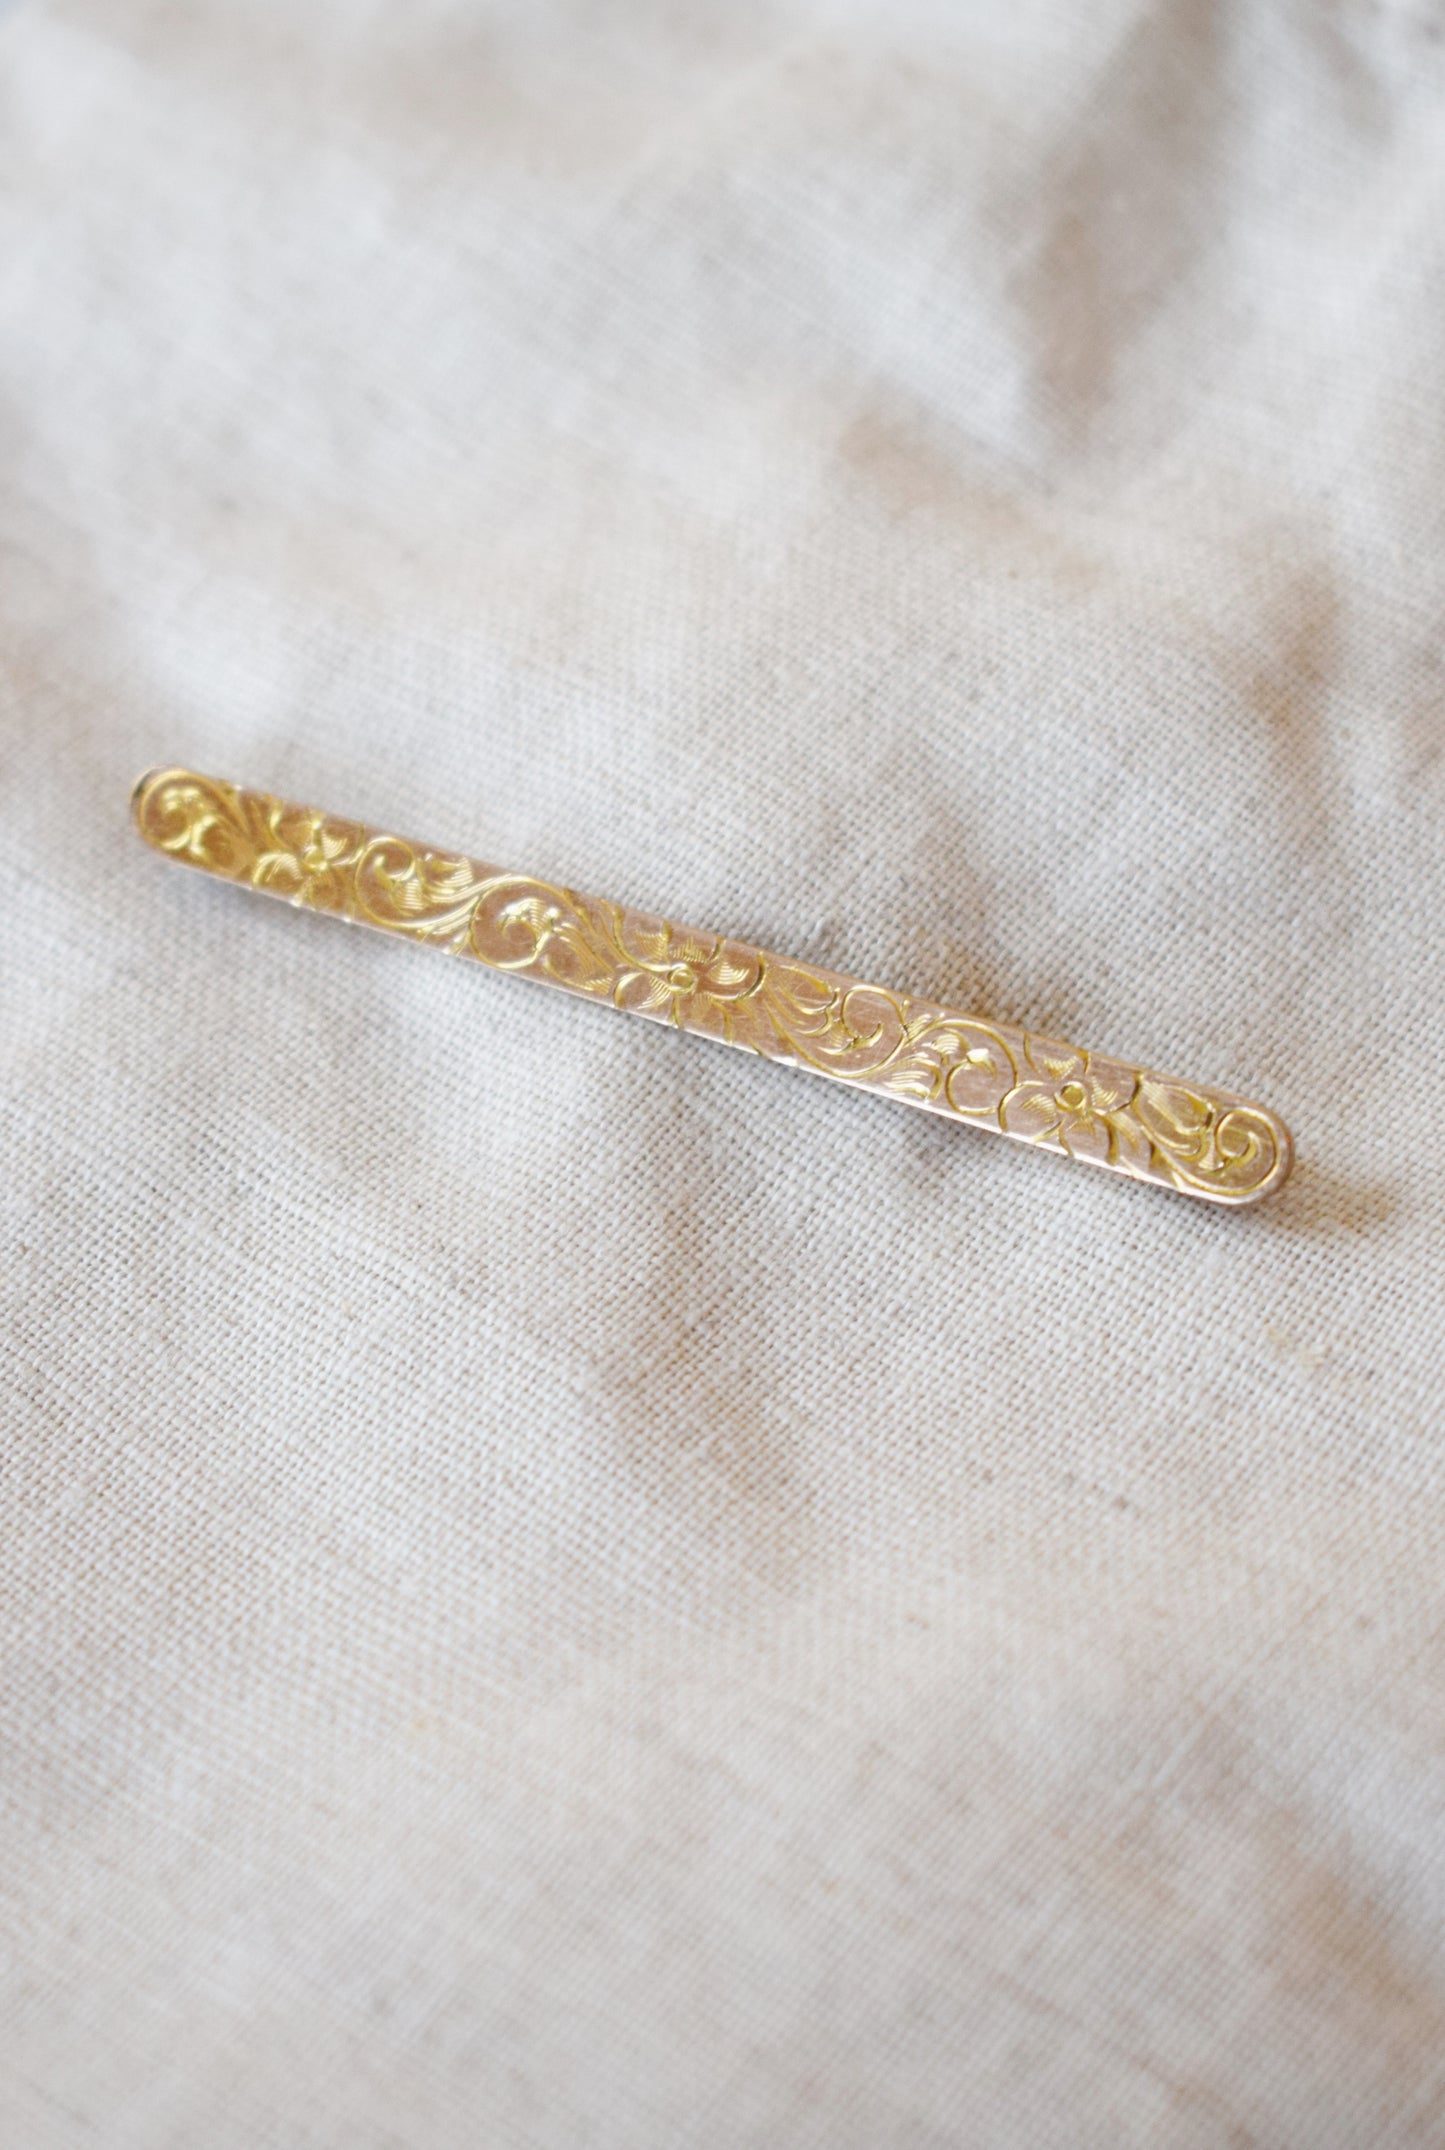 Antique Floral Engraved Gold Bar Pin